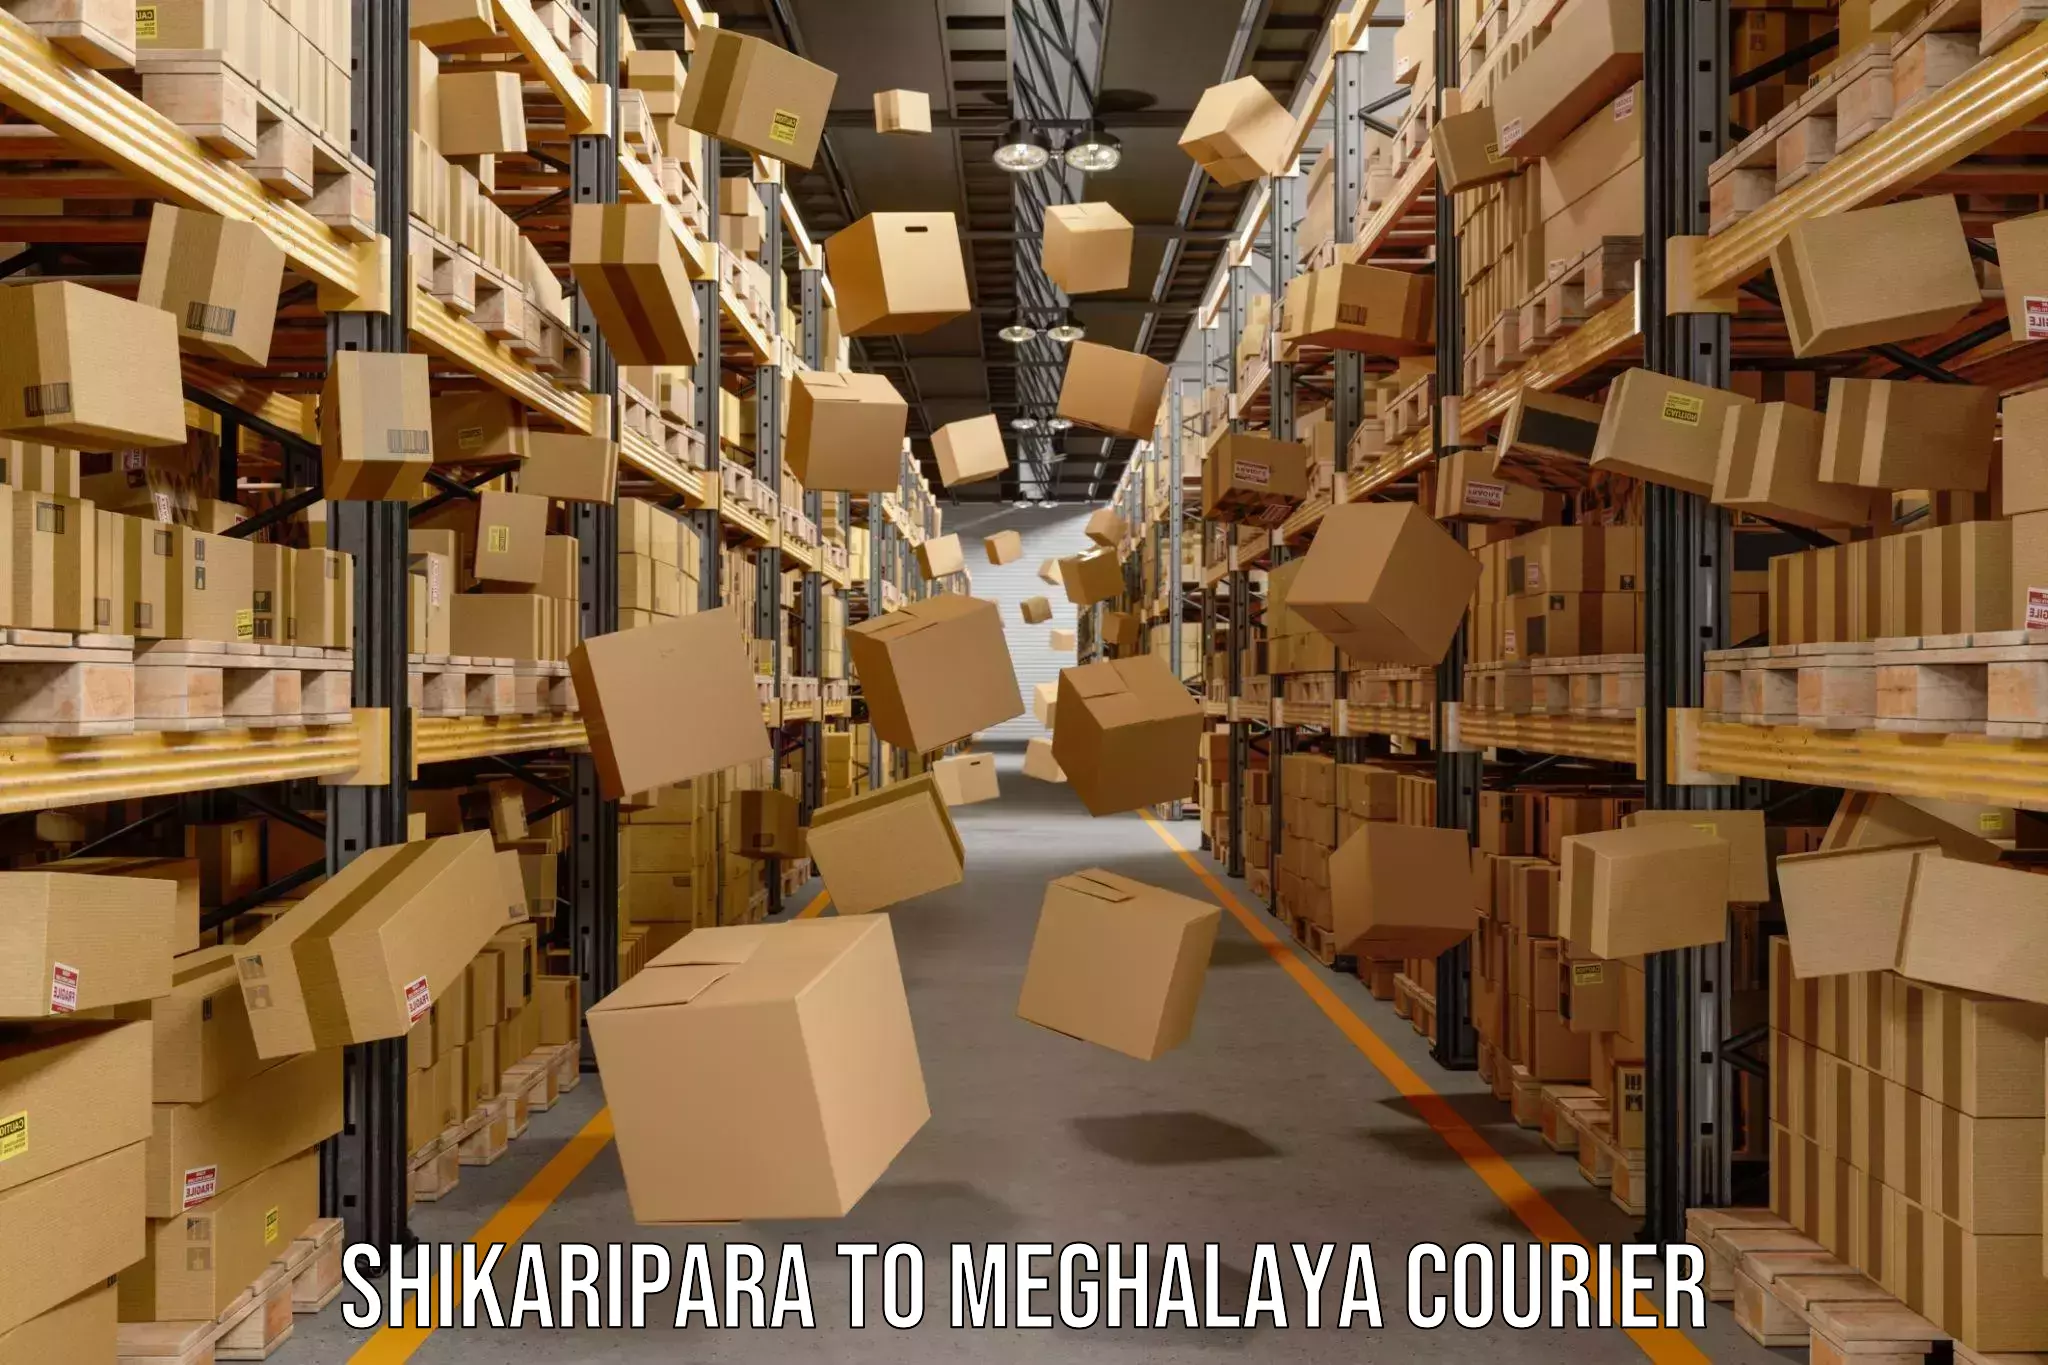 Global logistics network Shikaripara to Meghalaya